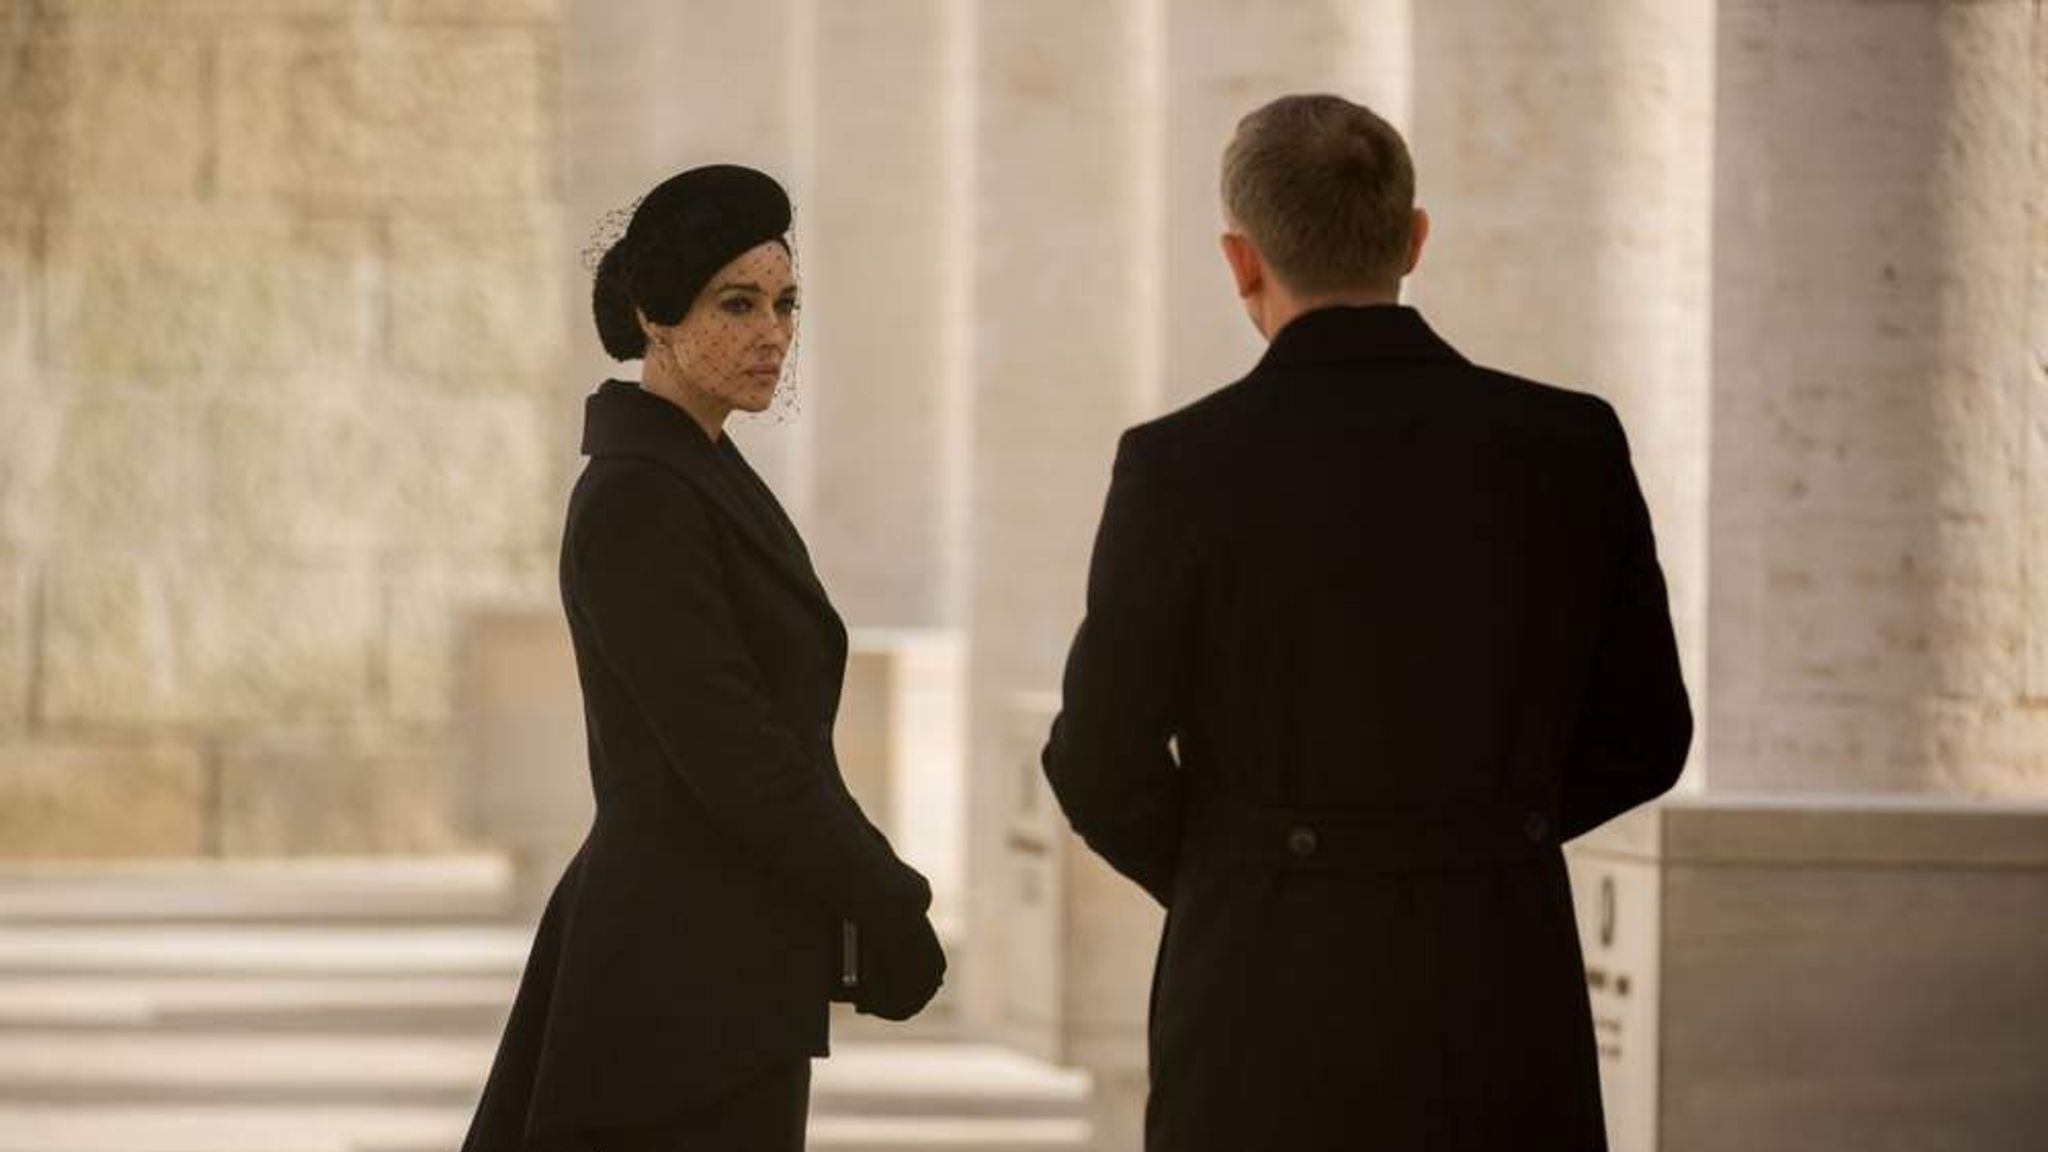 James Bond Spectre: Lea Seydoux and Monica Bellucci to play